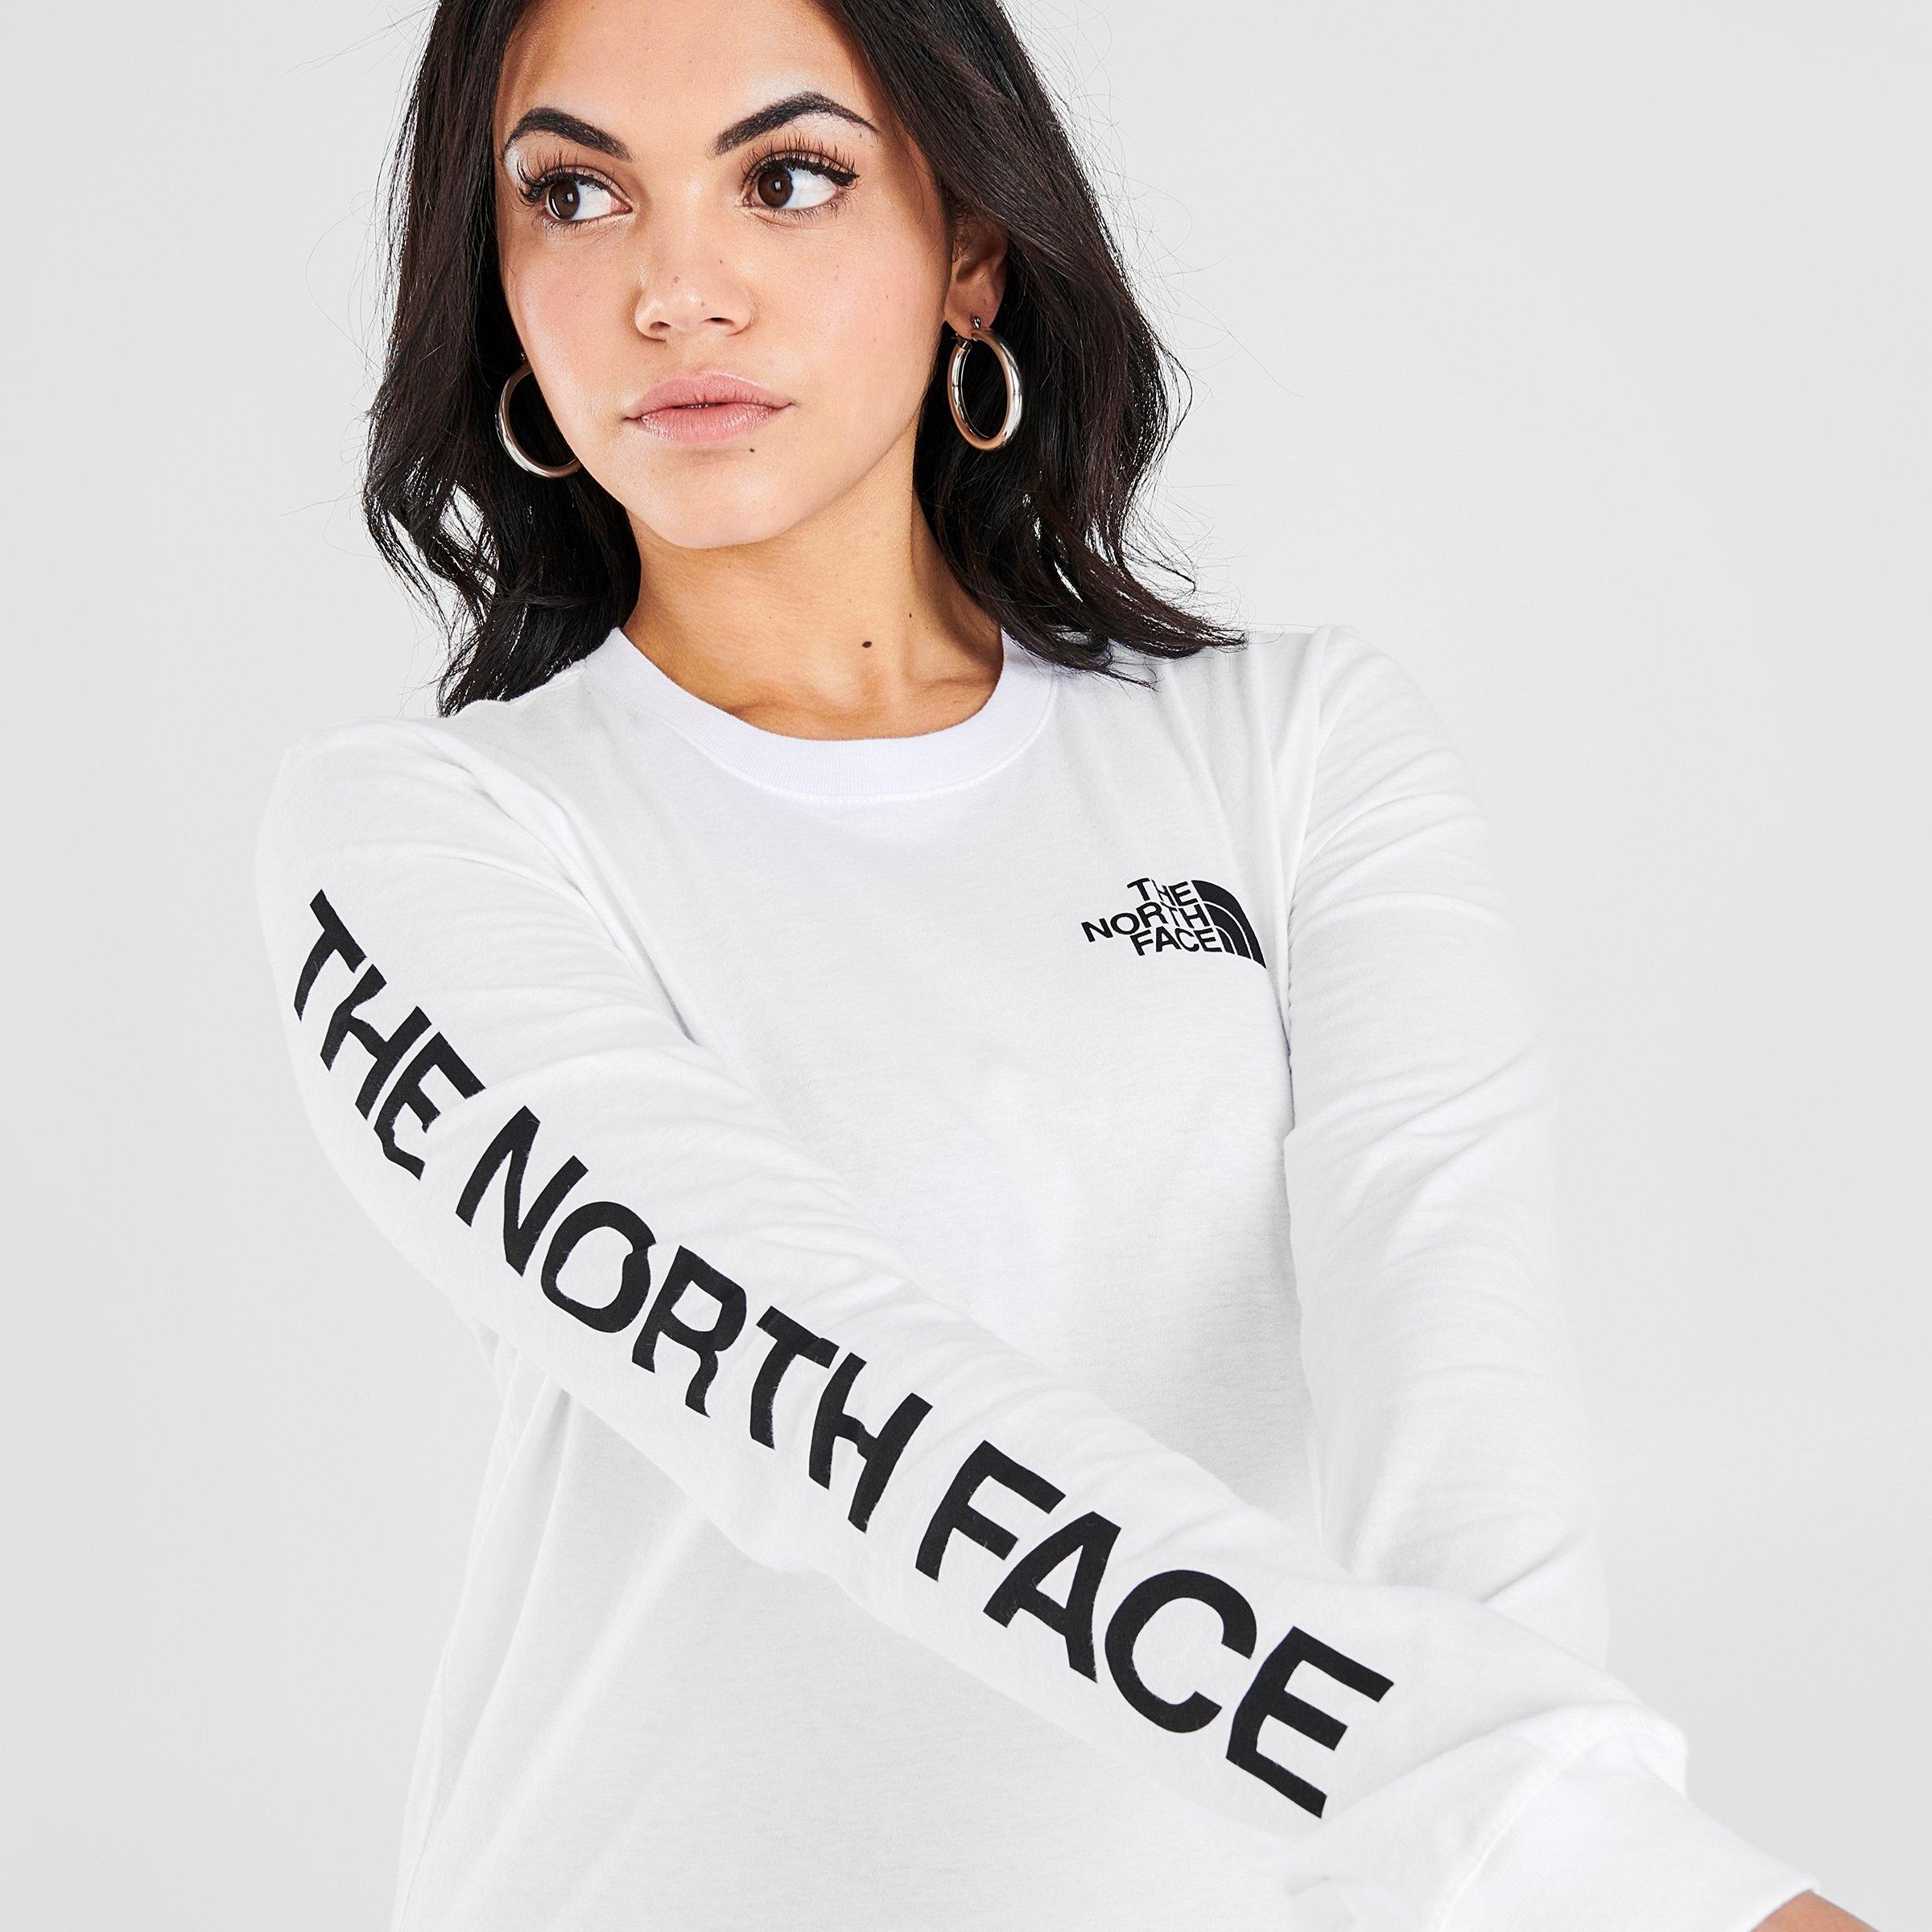 north face long sleeve t shirt womens